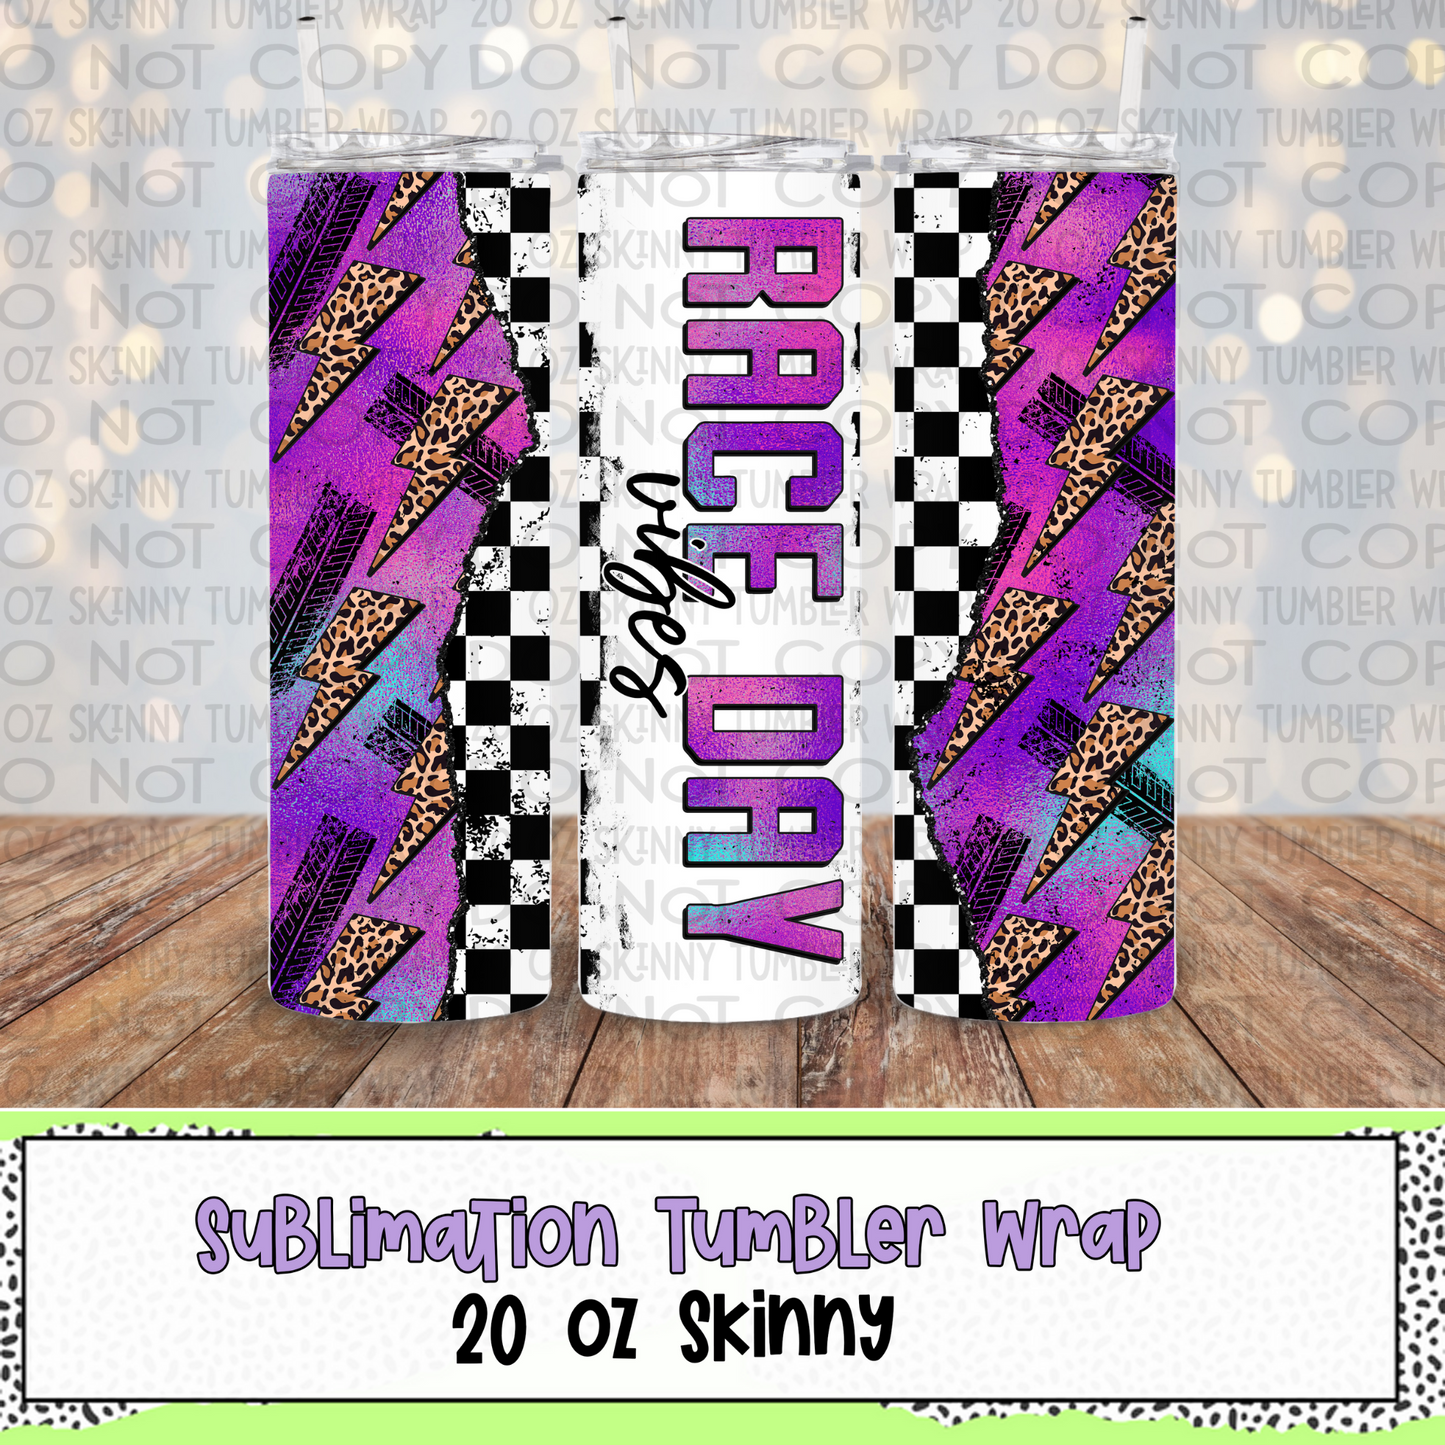 Neon Race Day 20 Oz Skinny Tumbler Wrap - Sublimation Transfer - RTS